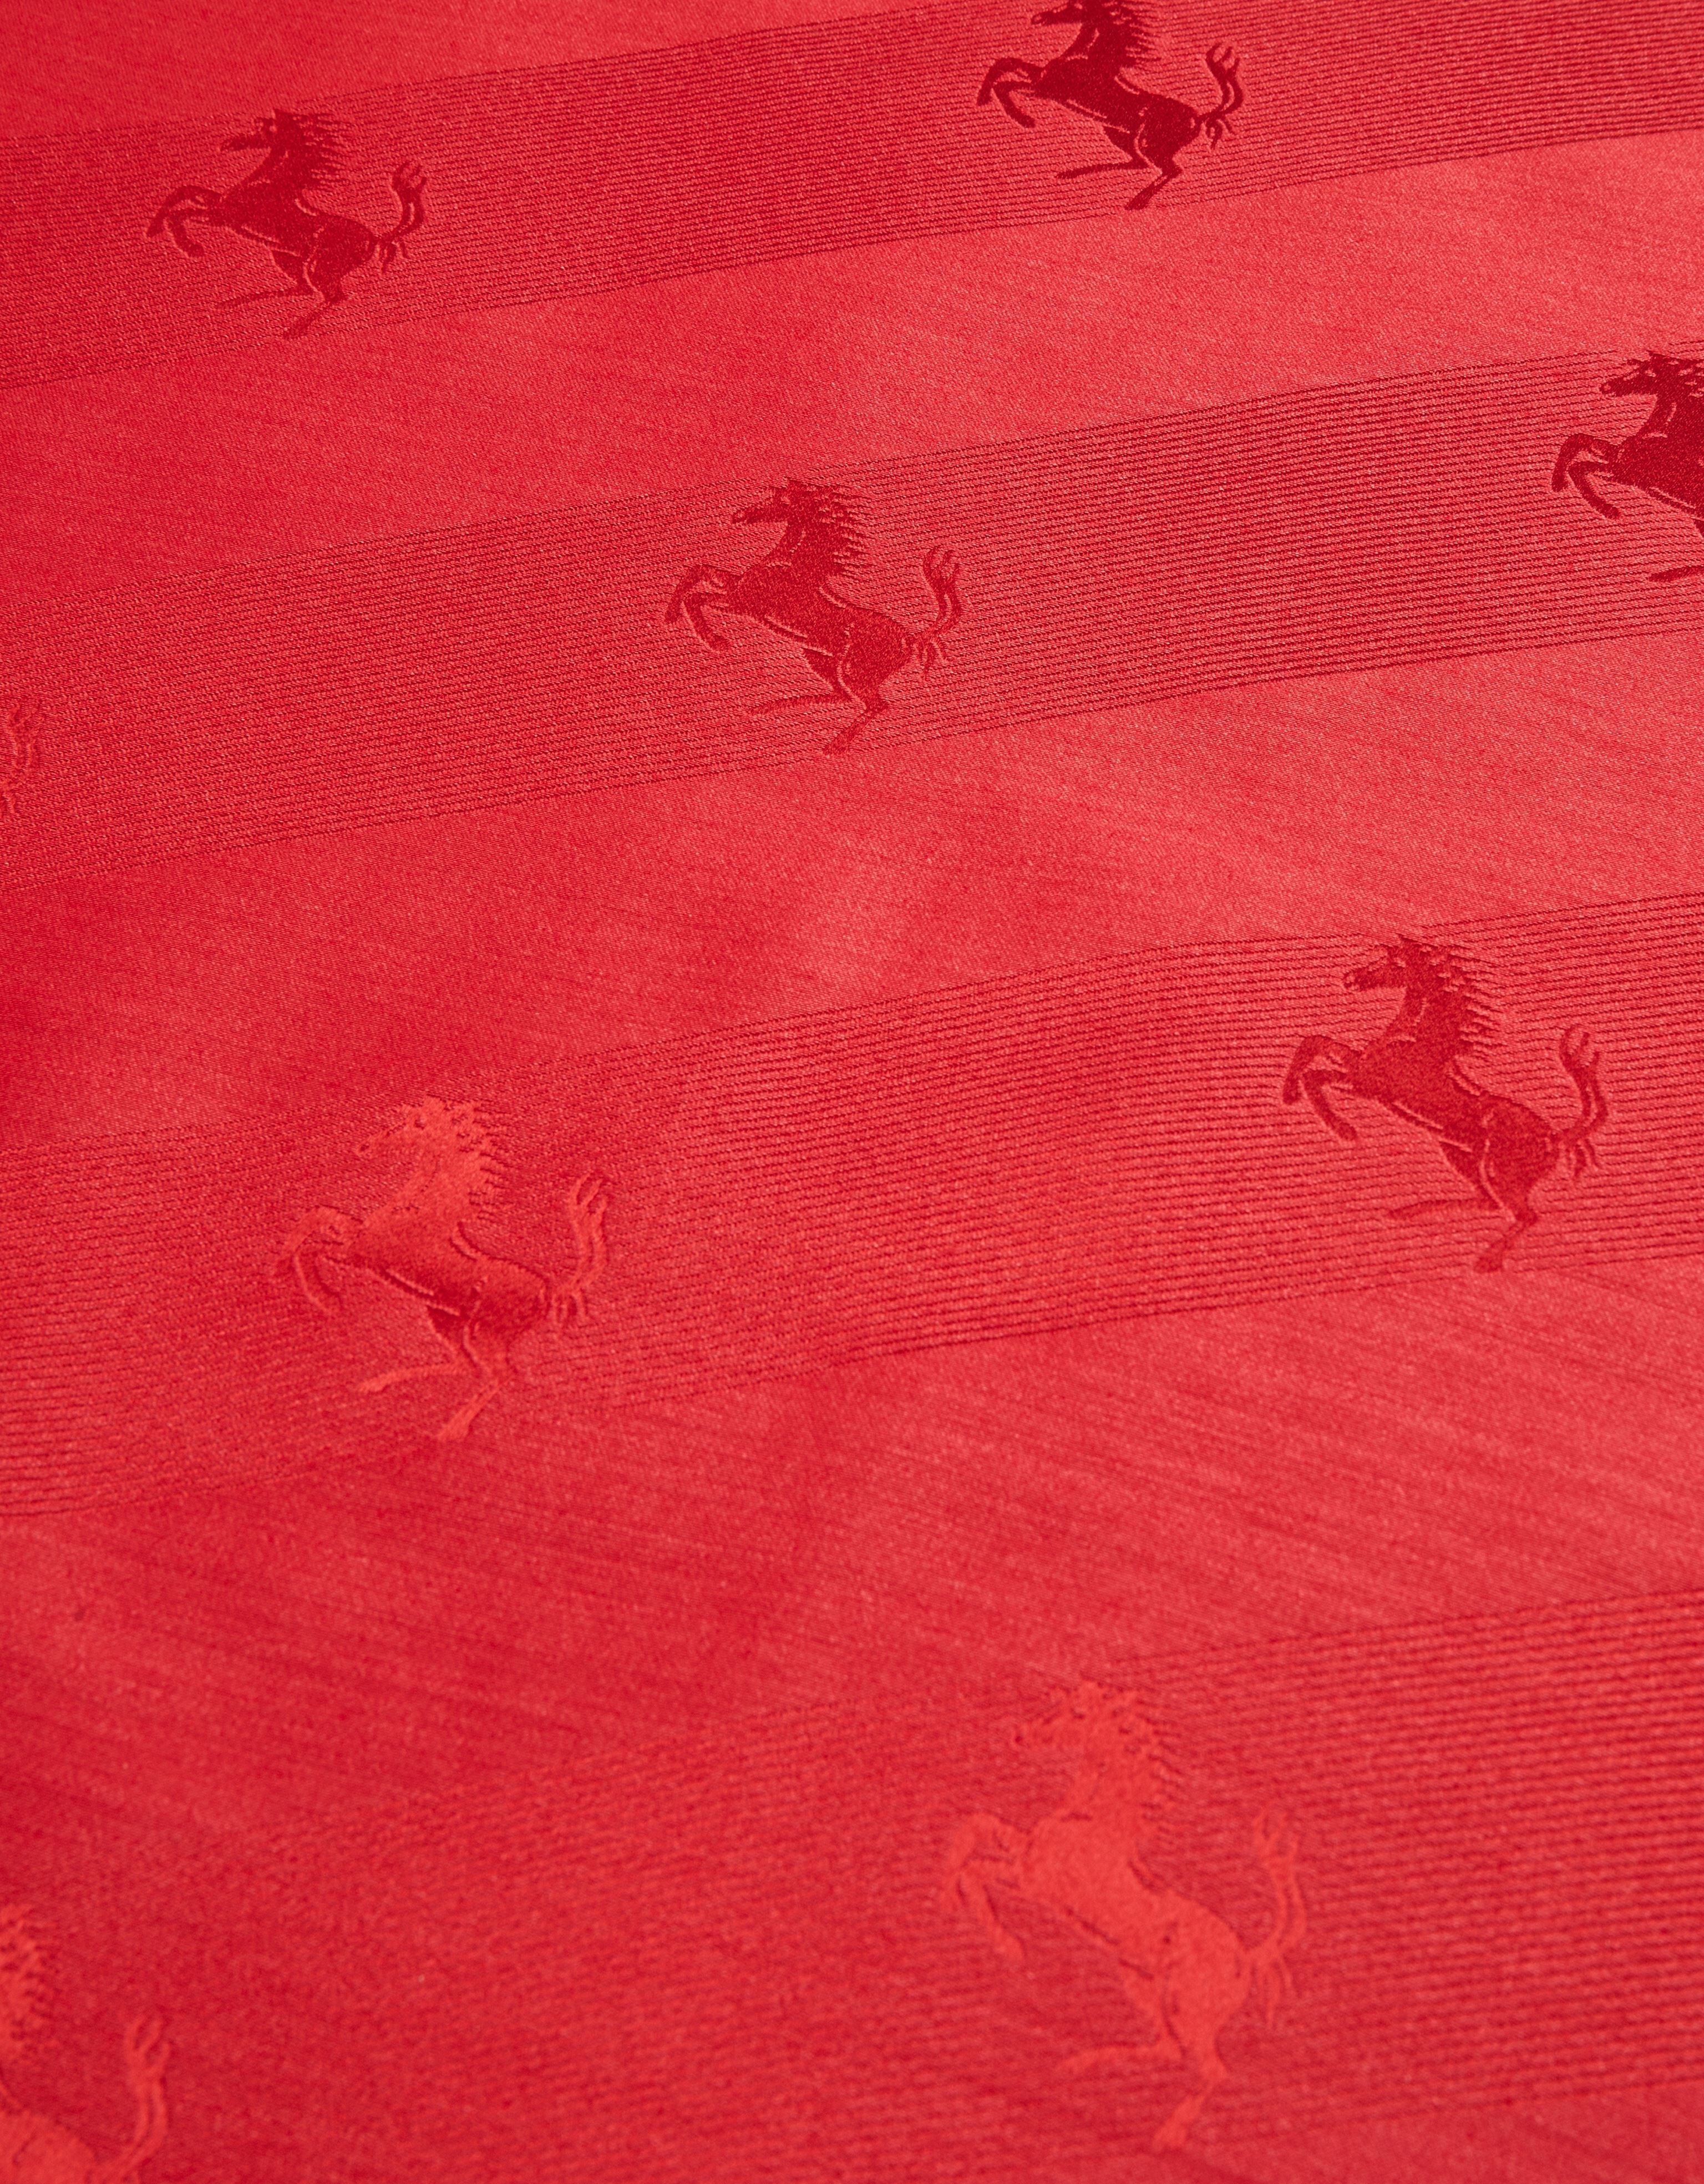 Ferrari Schal aus Wolle und Seide mit „Cavallino Rampante“-Muster Rosso Corsa 47072f